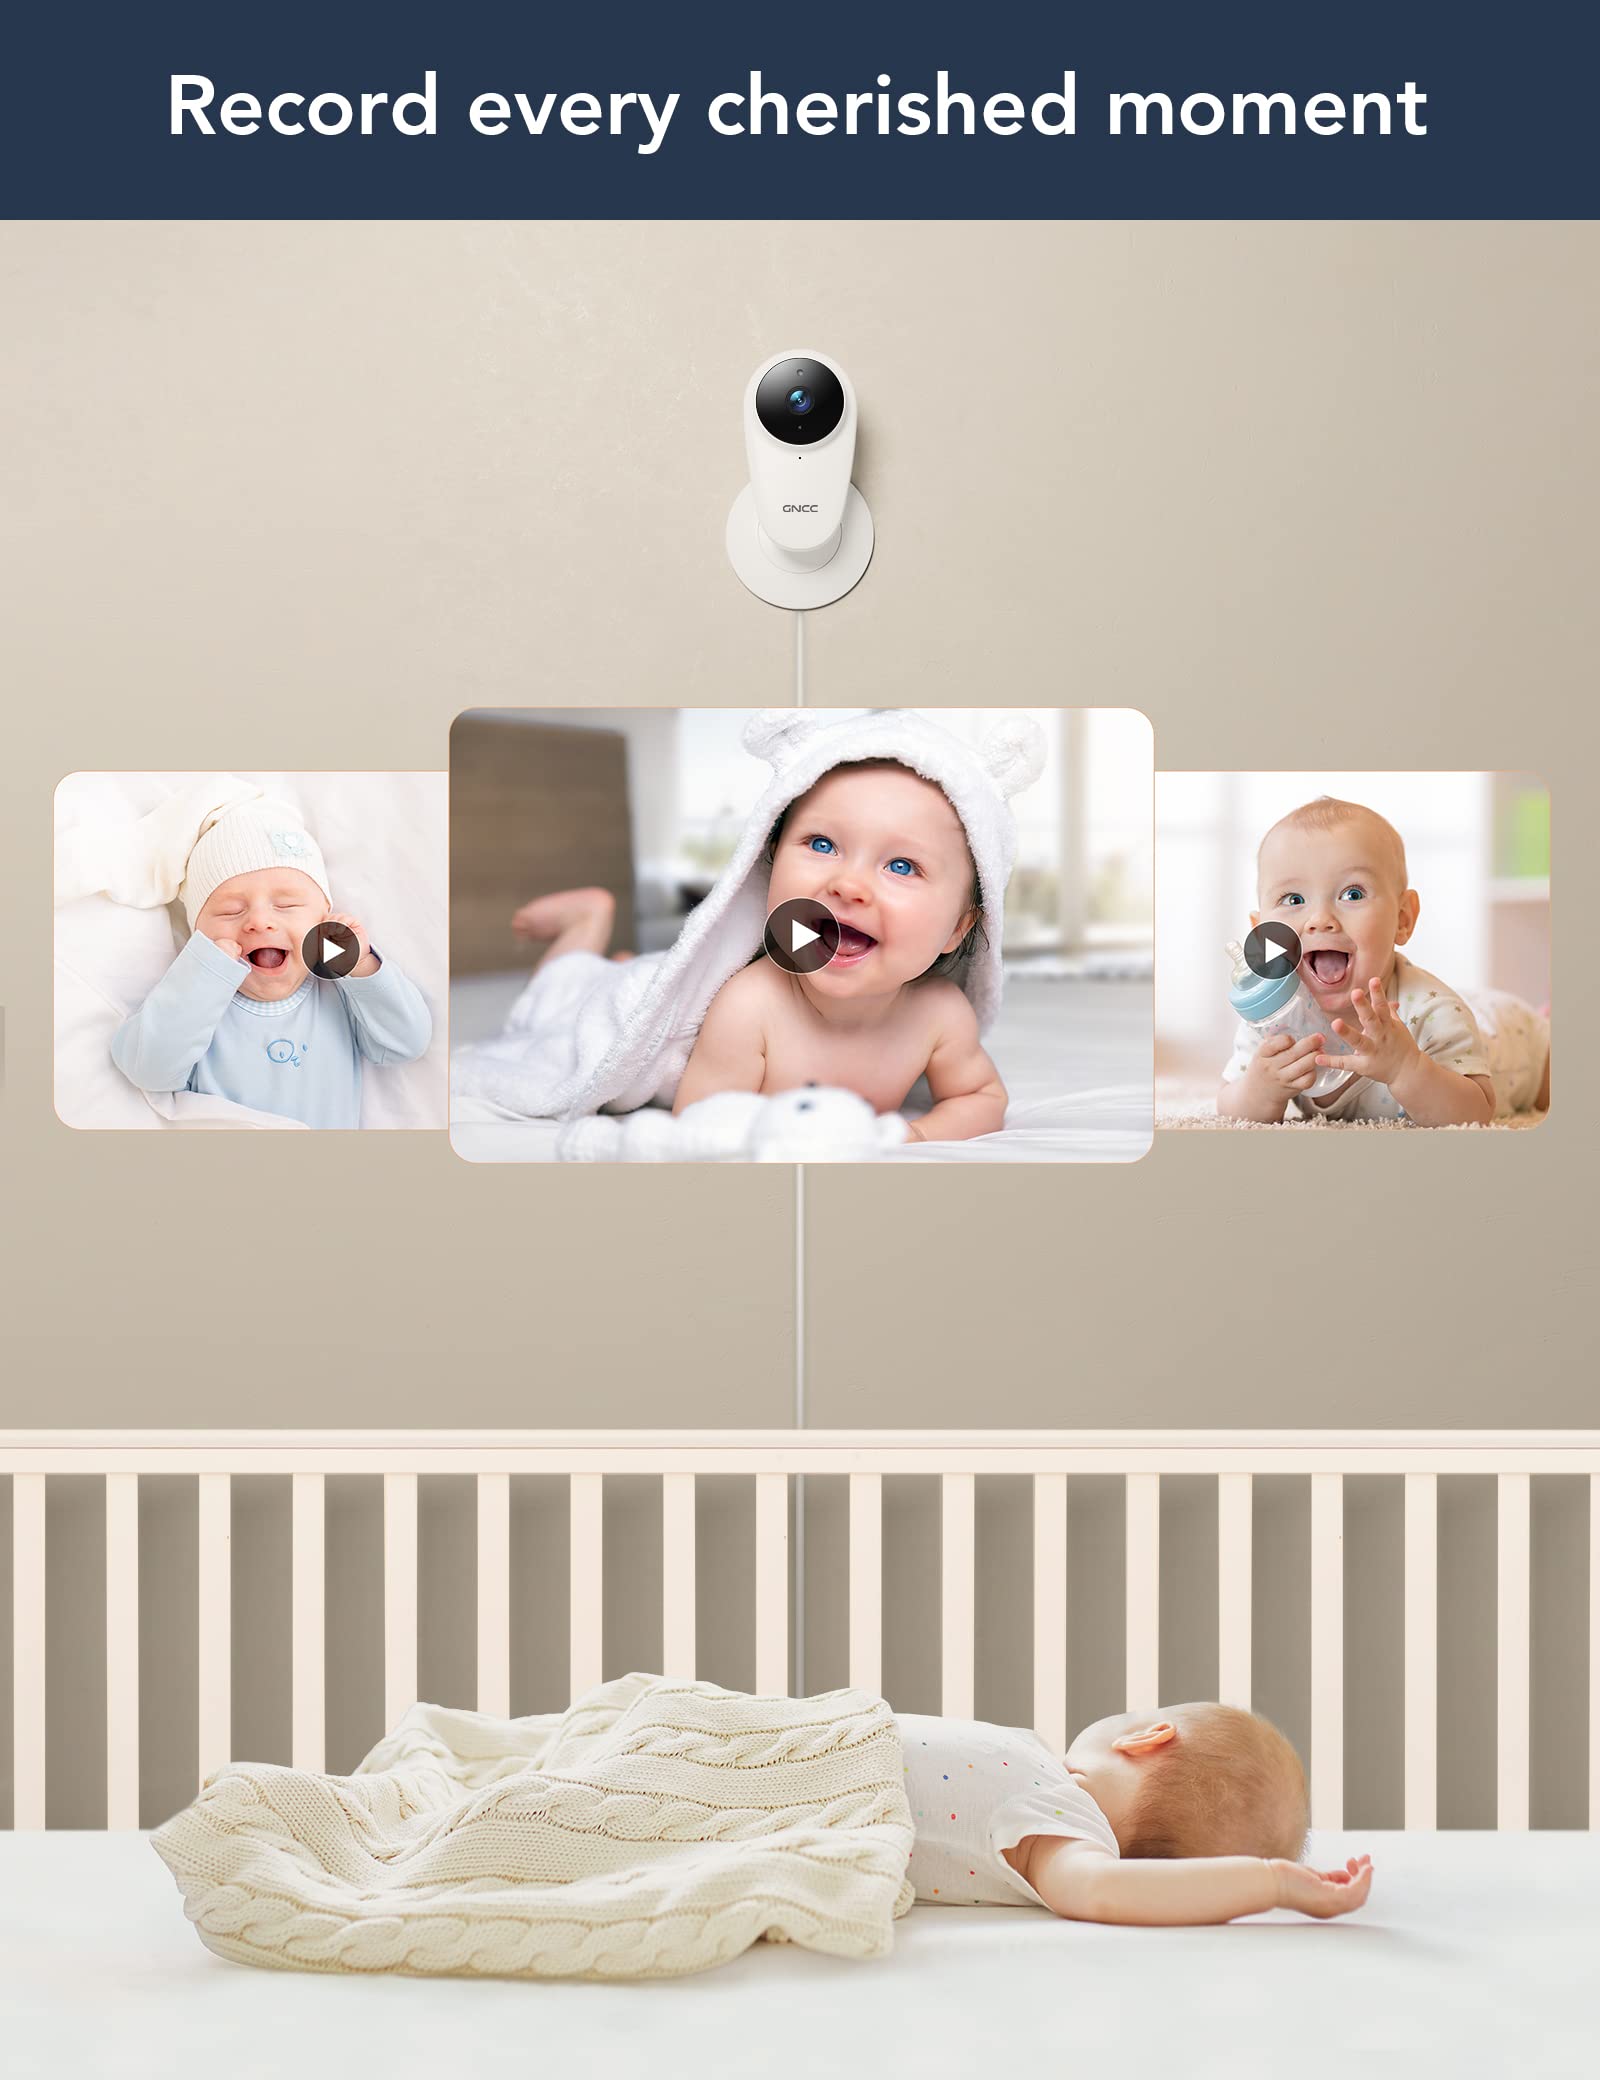 Telecamera baby monitor GNCC C1Pro 2k con visione notturna